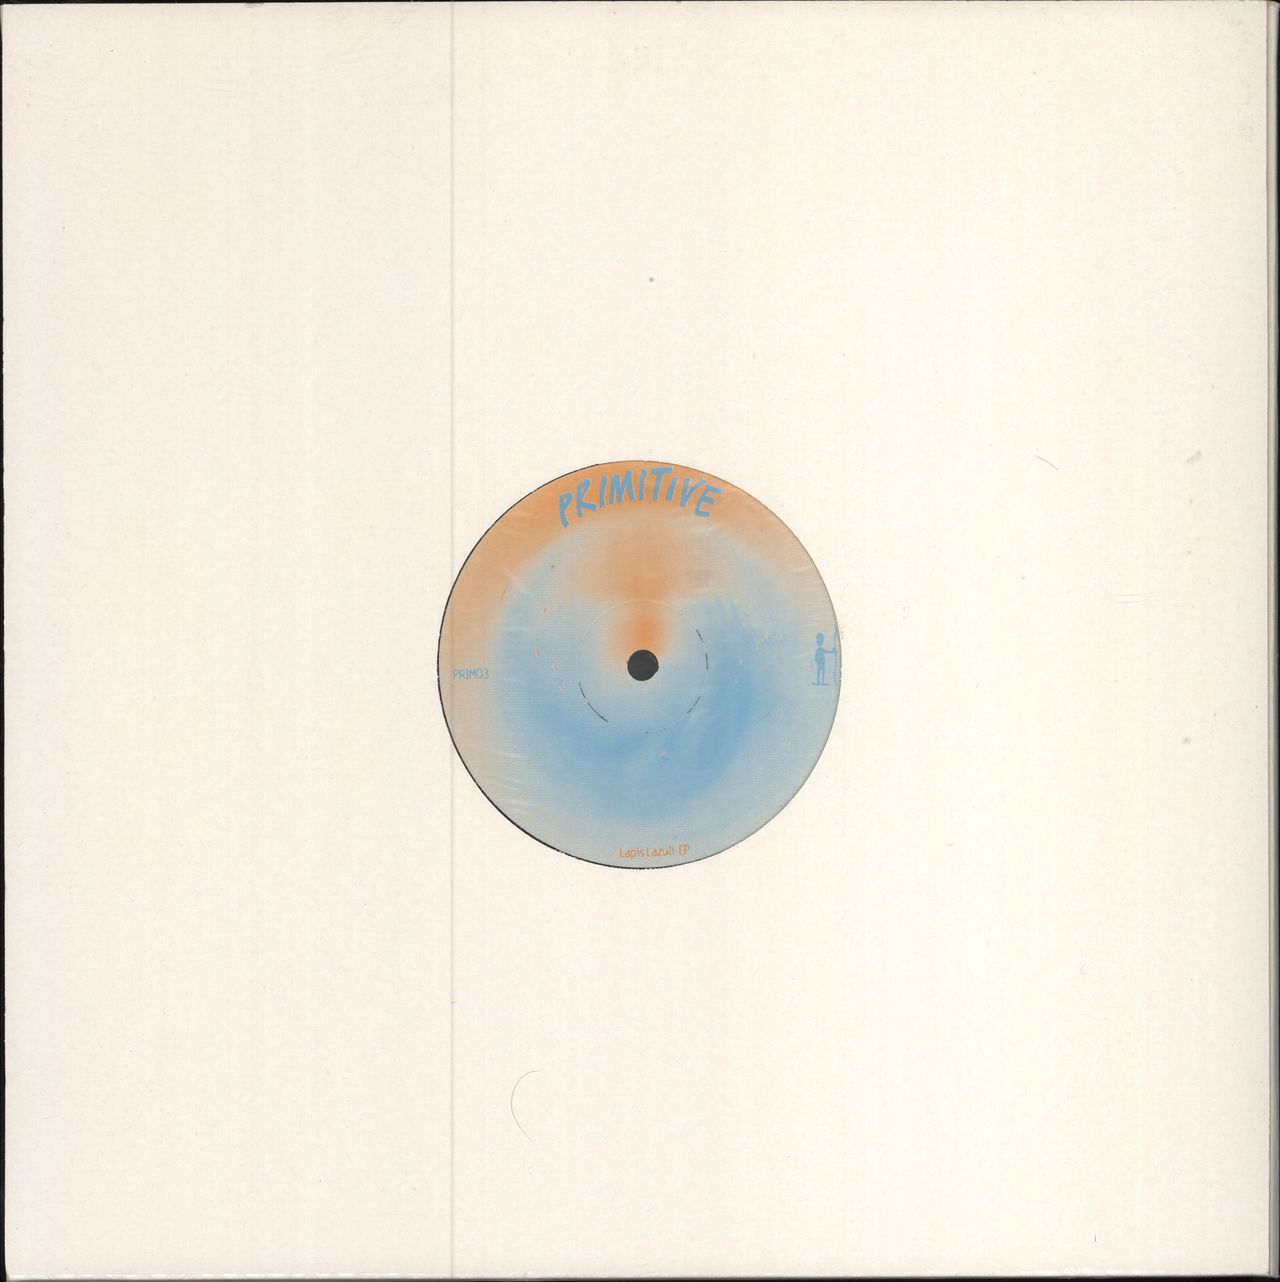 Swag Lapis Lazuli EP UK 12" vinyl single (12 inch record / Maxi-single) PRIM003